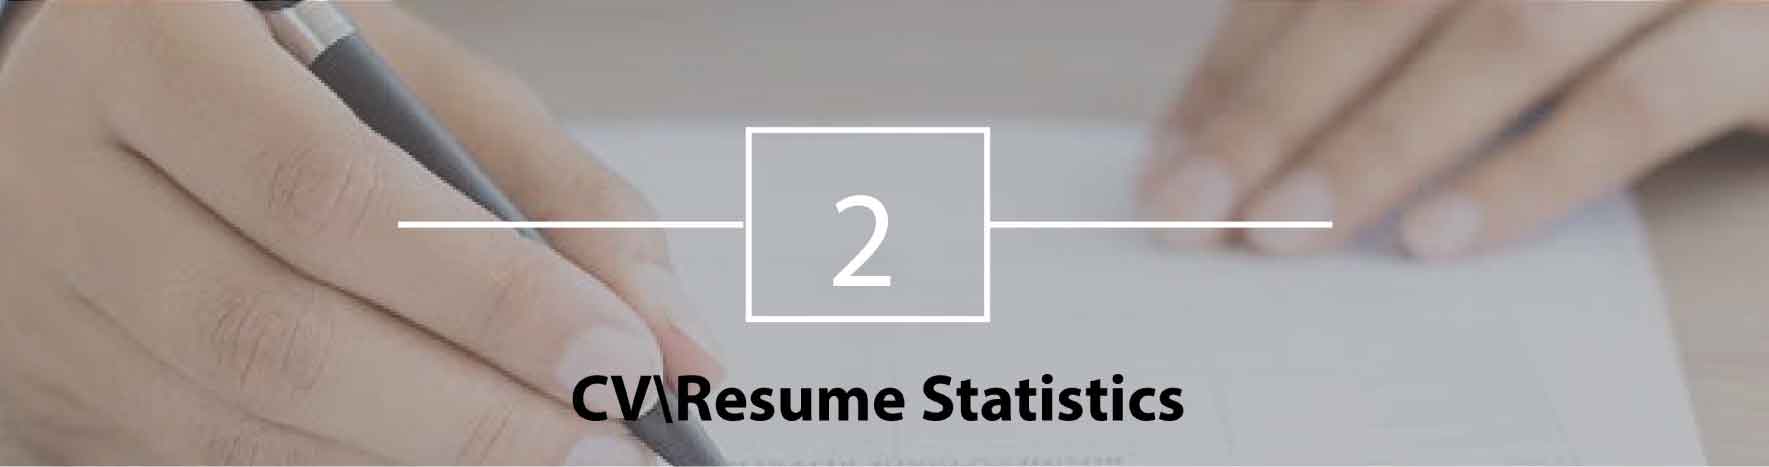 CV/Resume Statistics